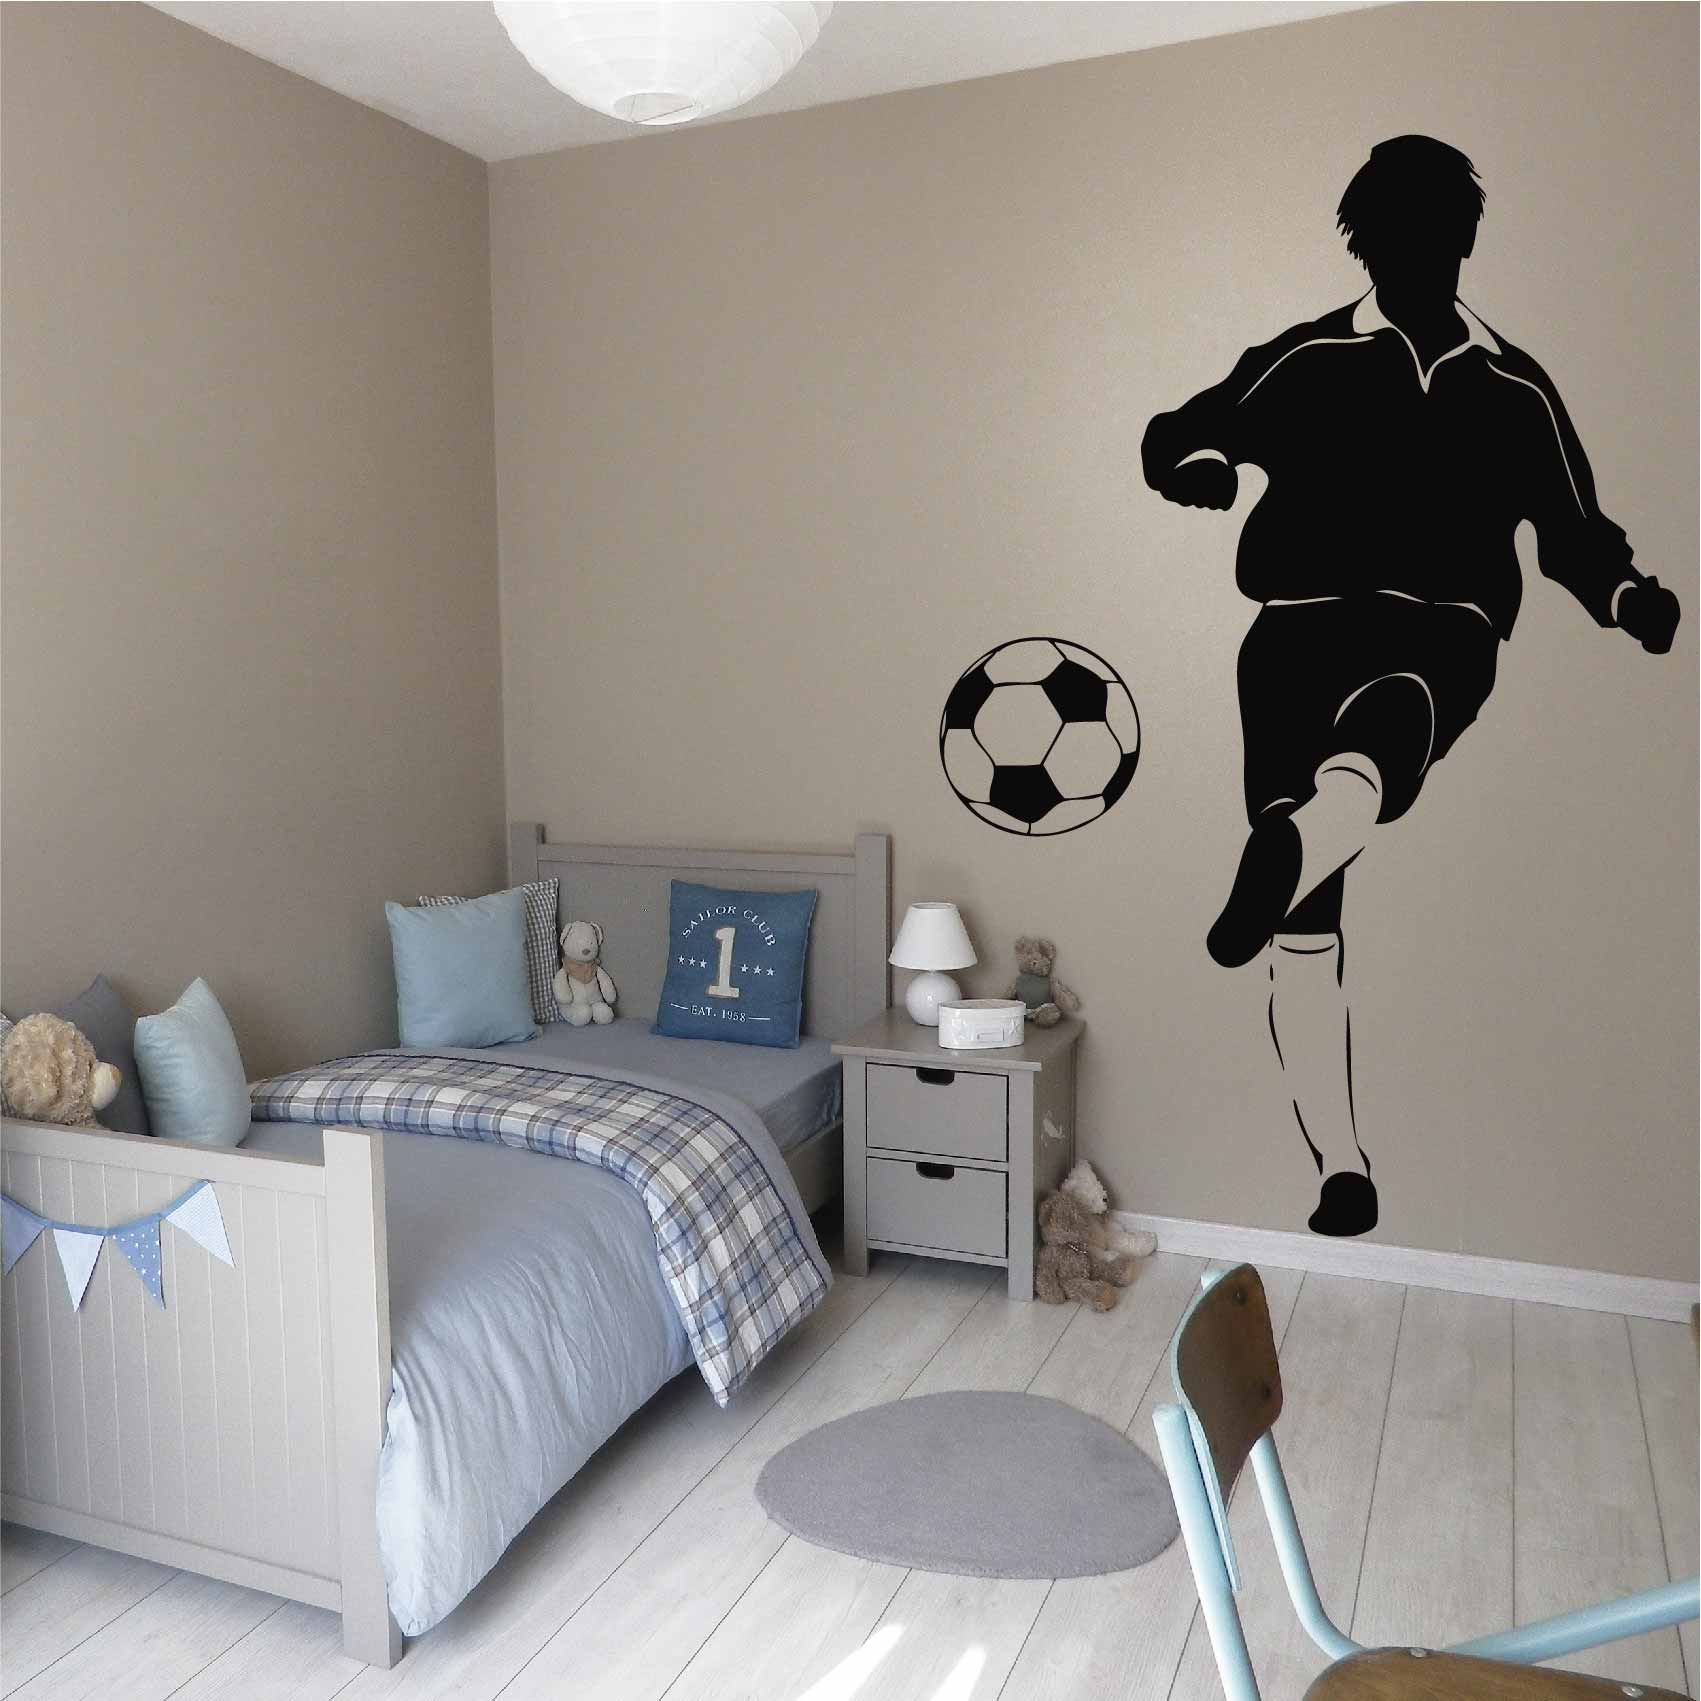 stickers-mural-football-ref4sport-stickers-muraux-foot-autocollant-football-deco-chambre-enfant-salon-sticker-mural-sport